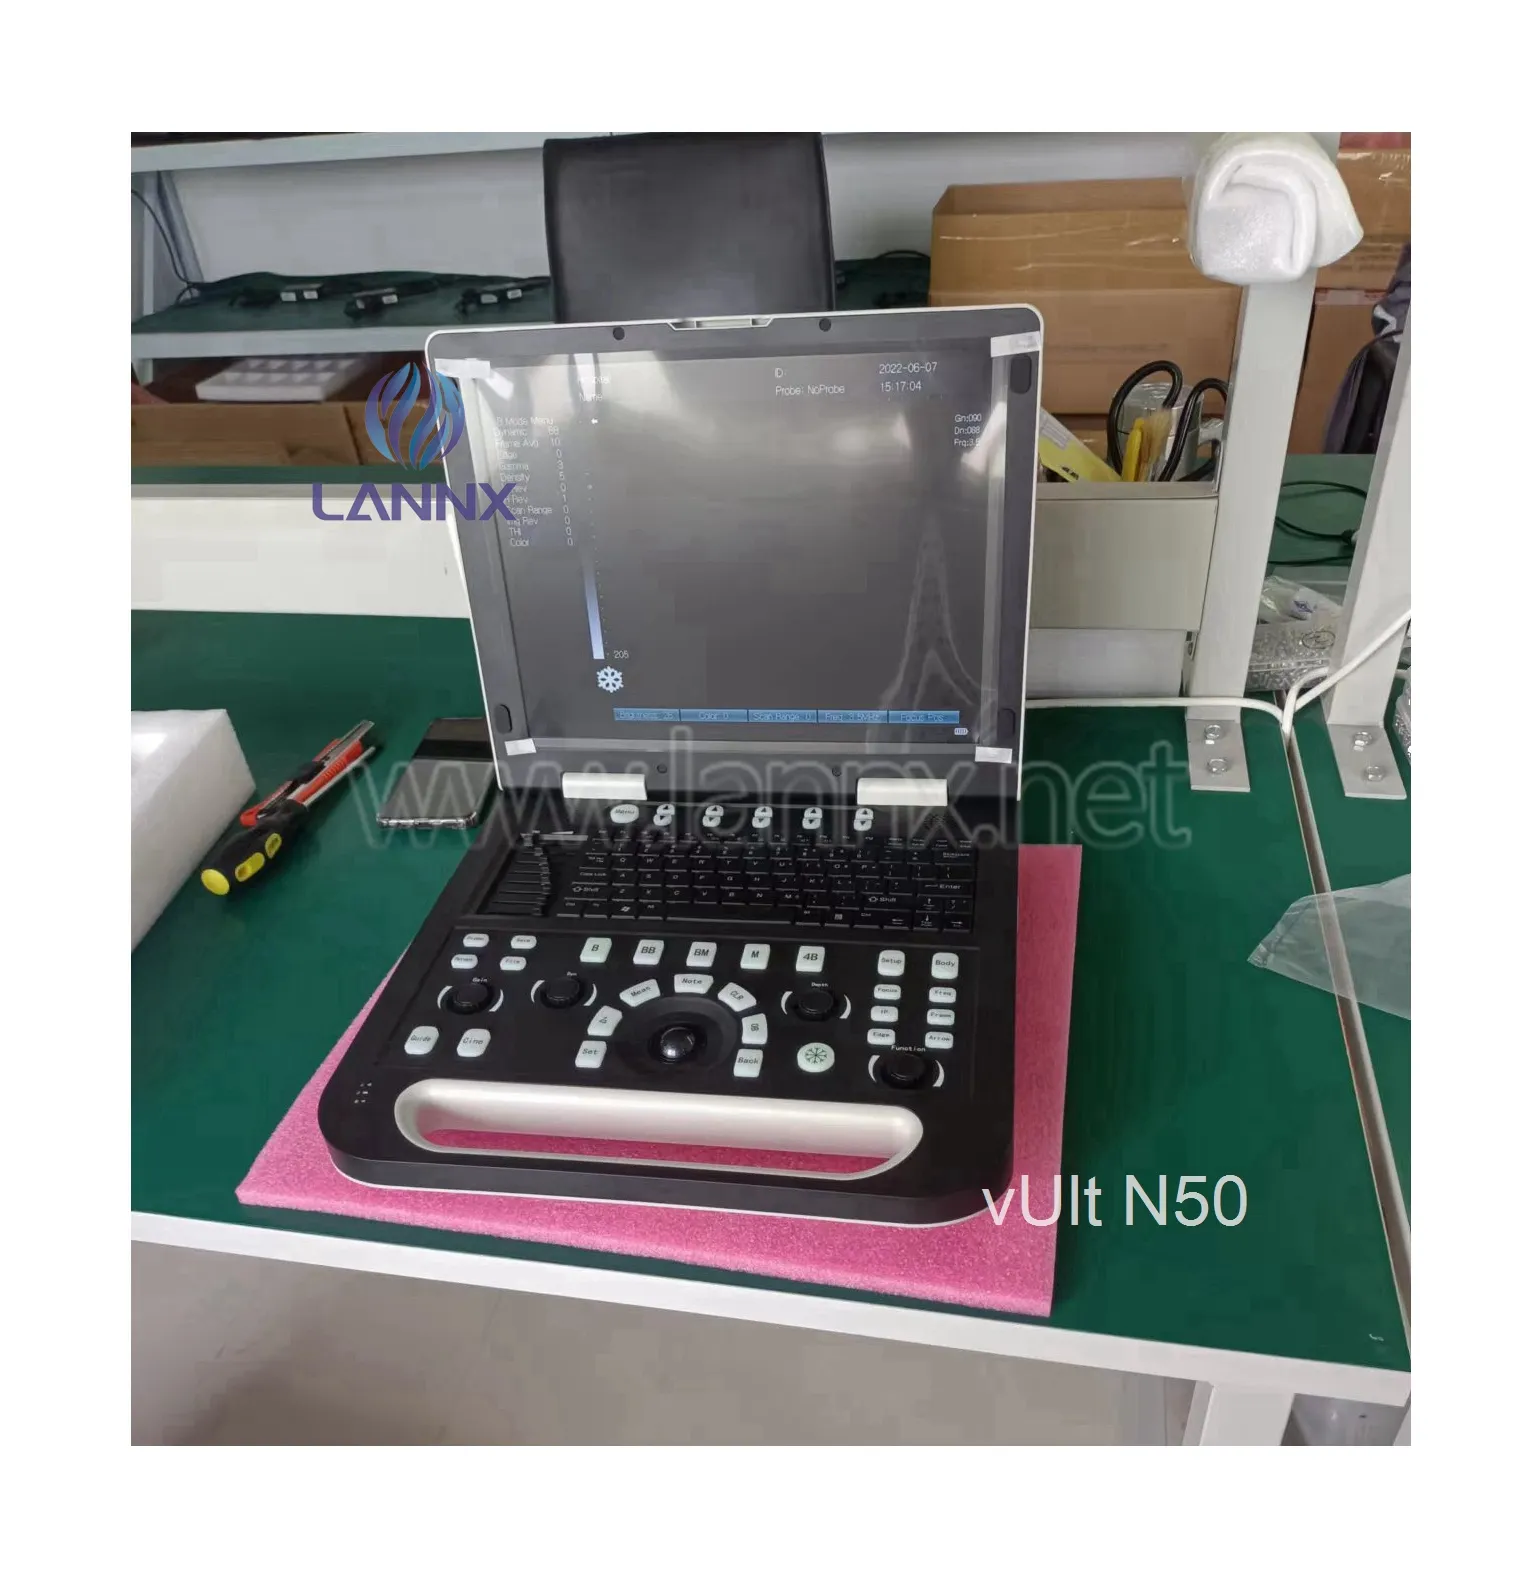 LANNX vUlt N50 पशु Ecografo Portatil गर्भावस्था पशु चिकित्सक अल्ट्रासाउंड सोनार स्कैनर पीईटी चिकित्सा नैदानिक पोर्टेबल यूएसजी